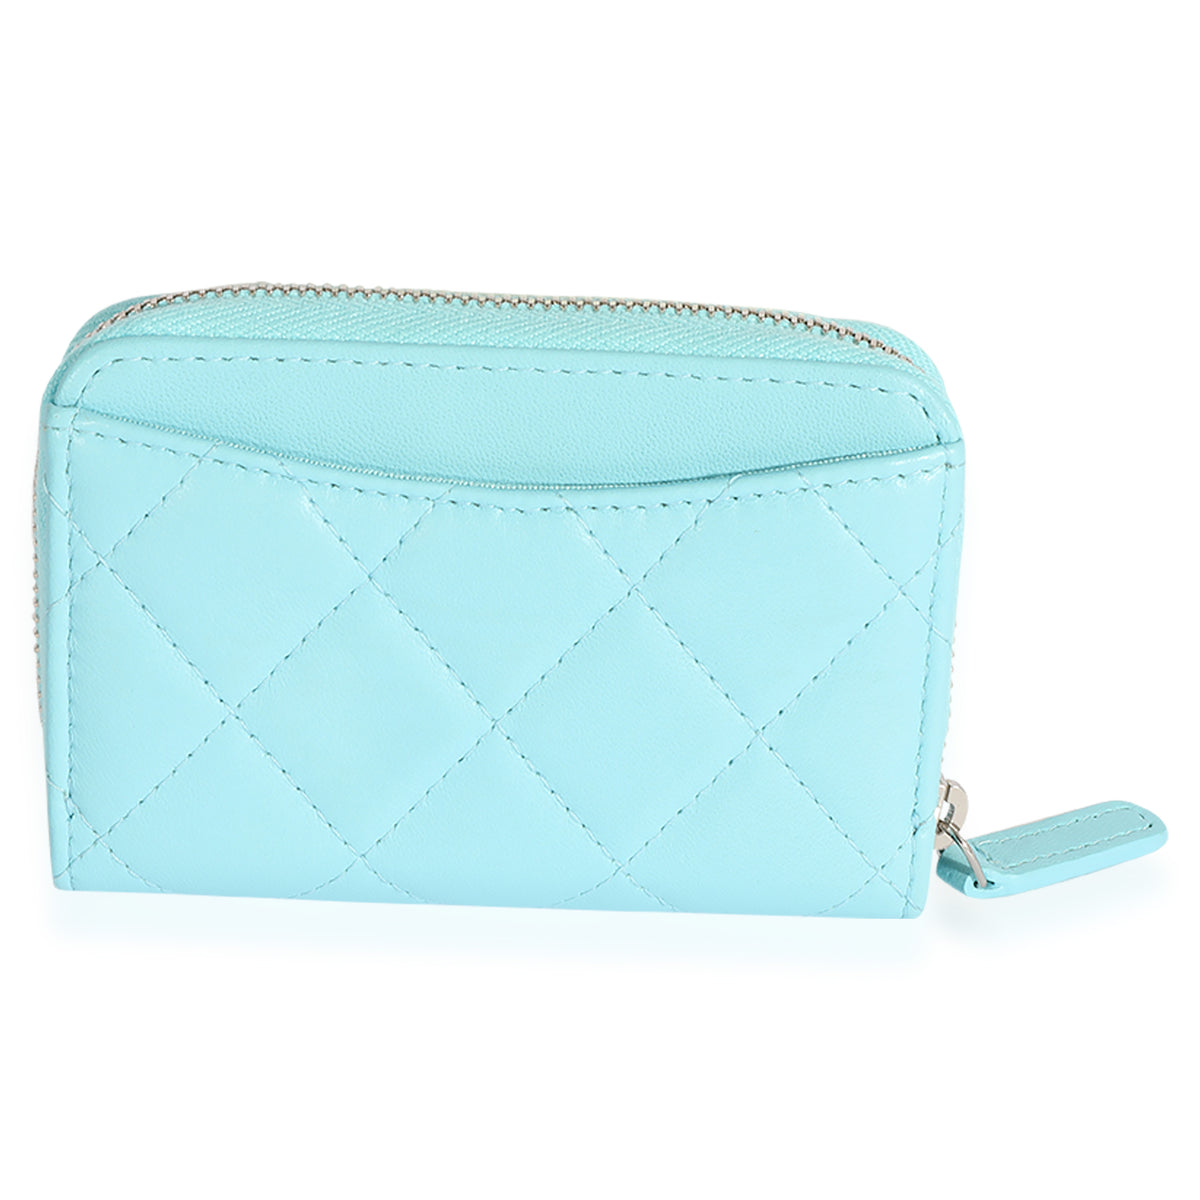 Chanel Light Blue Quilted Lambskin Zippy Card Holder Wallet